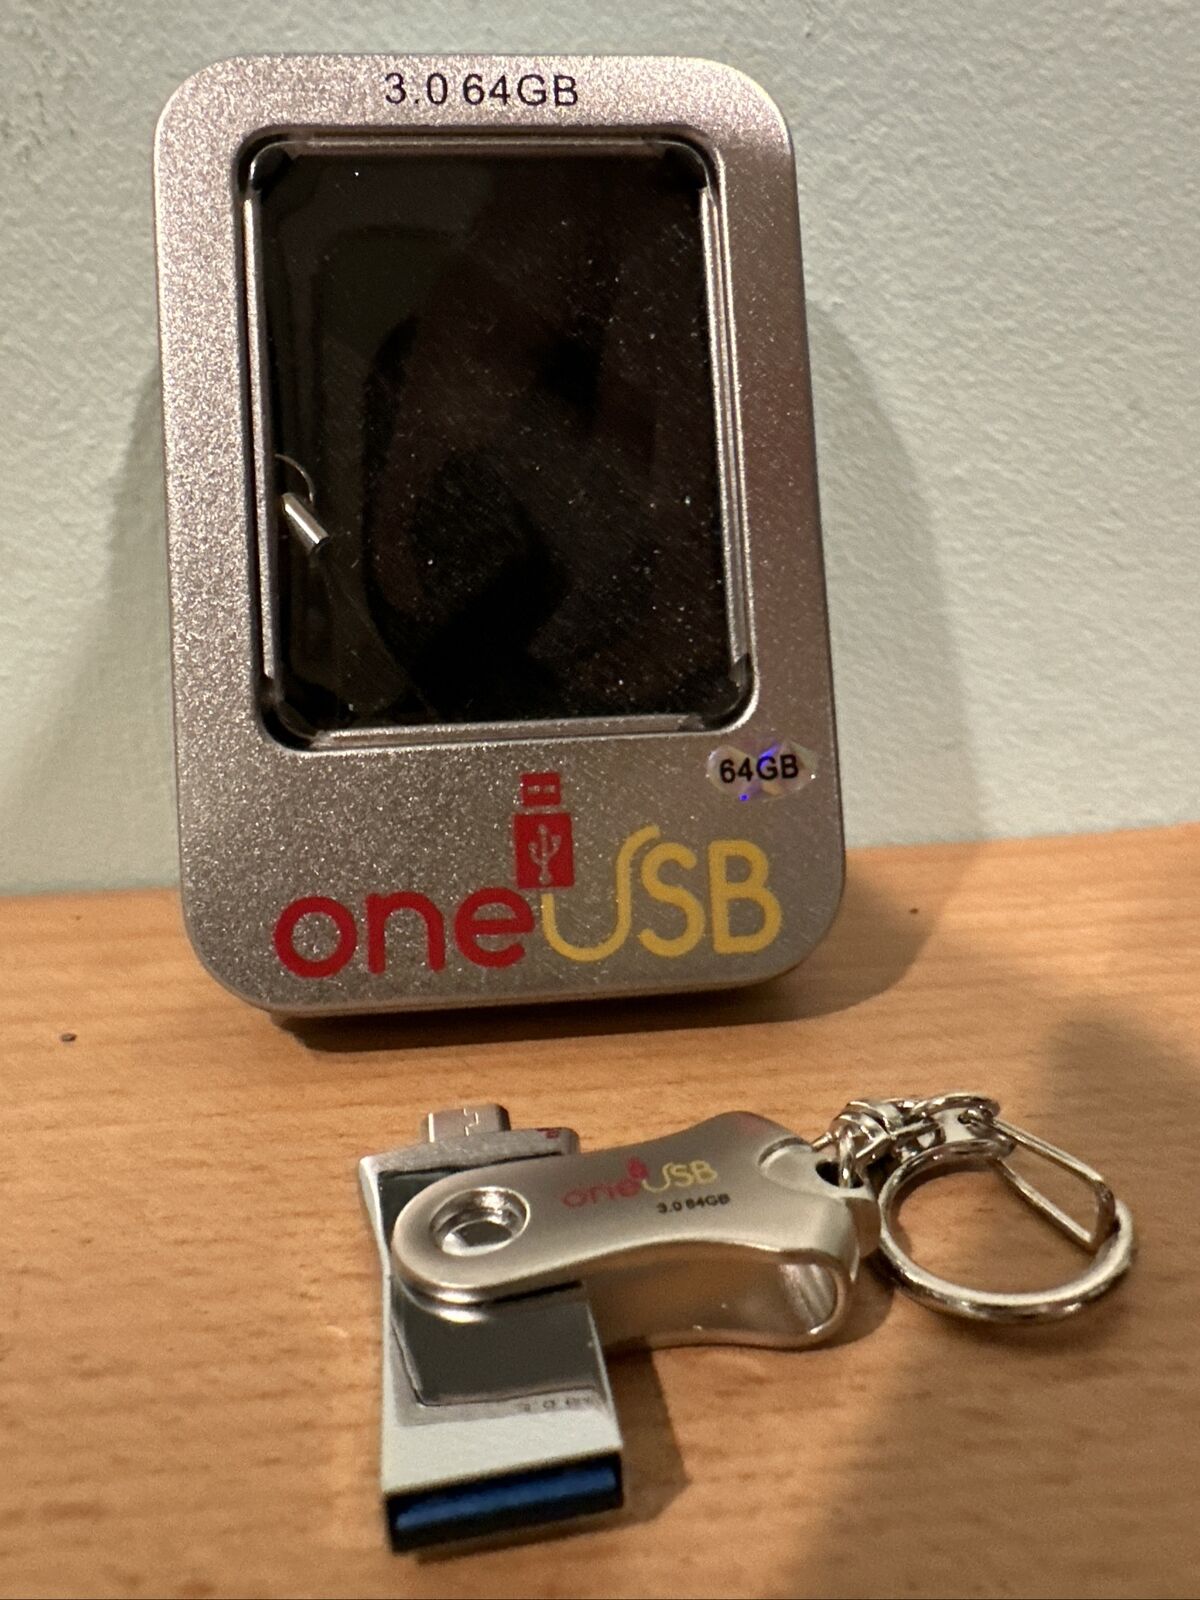 64gb USB drive - With Micro USB and USB C